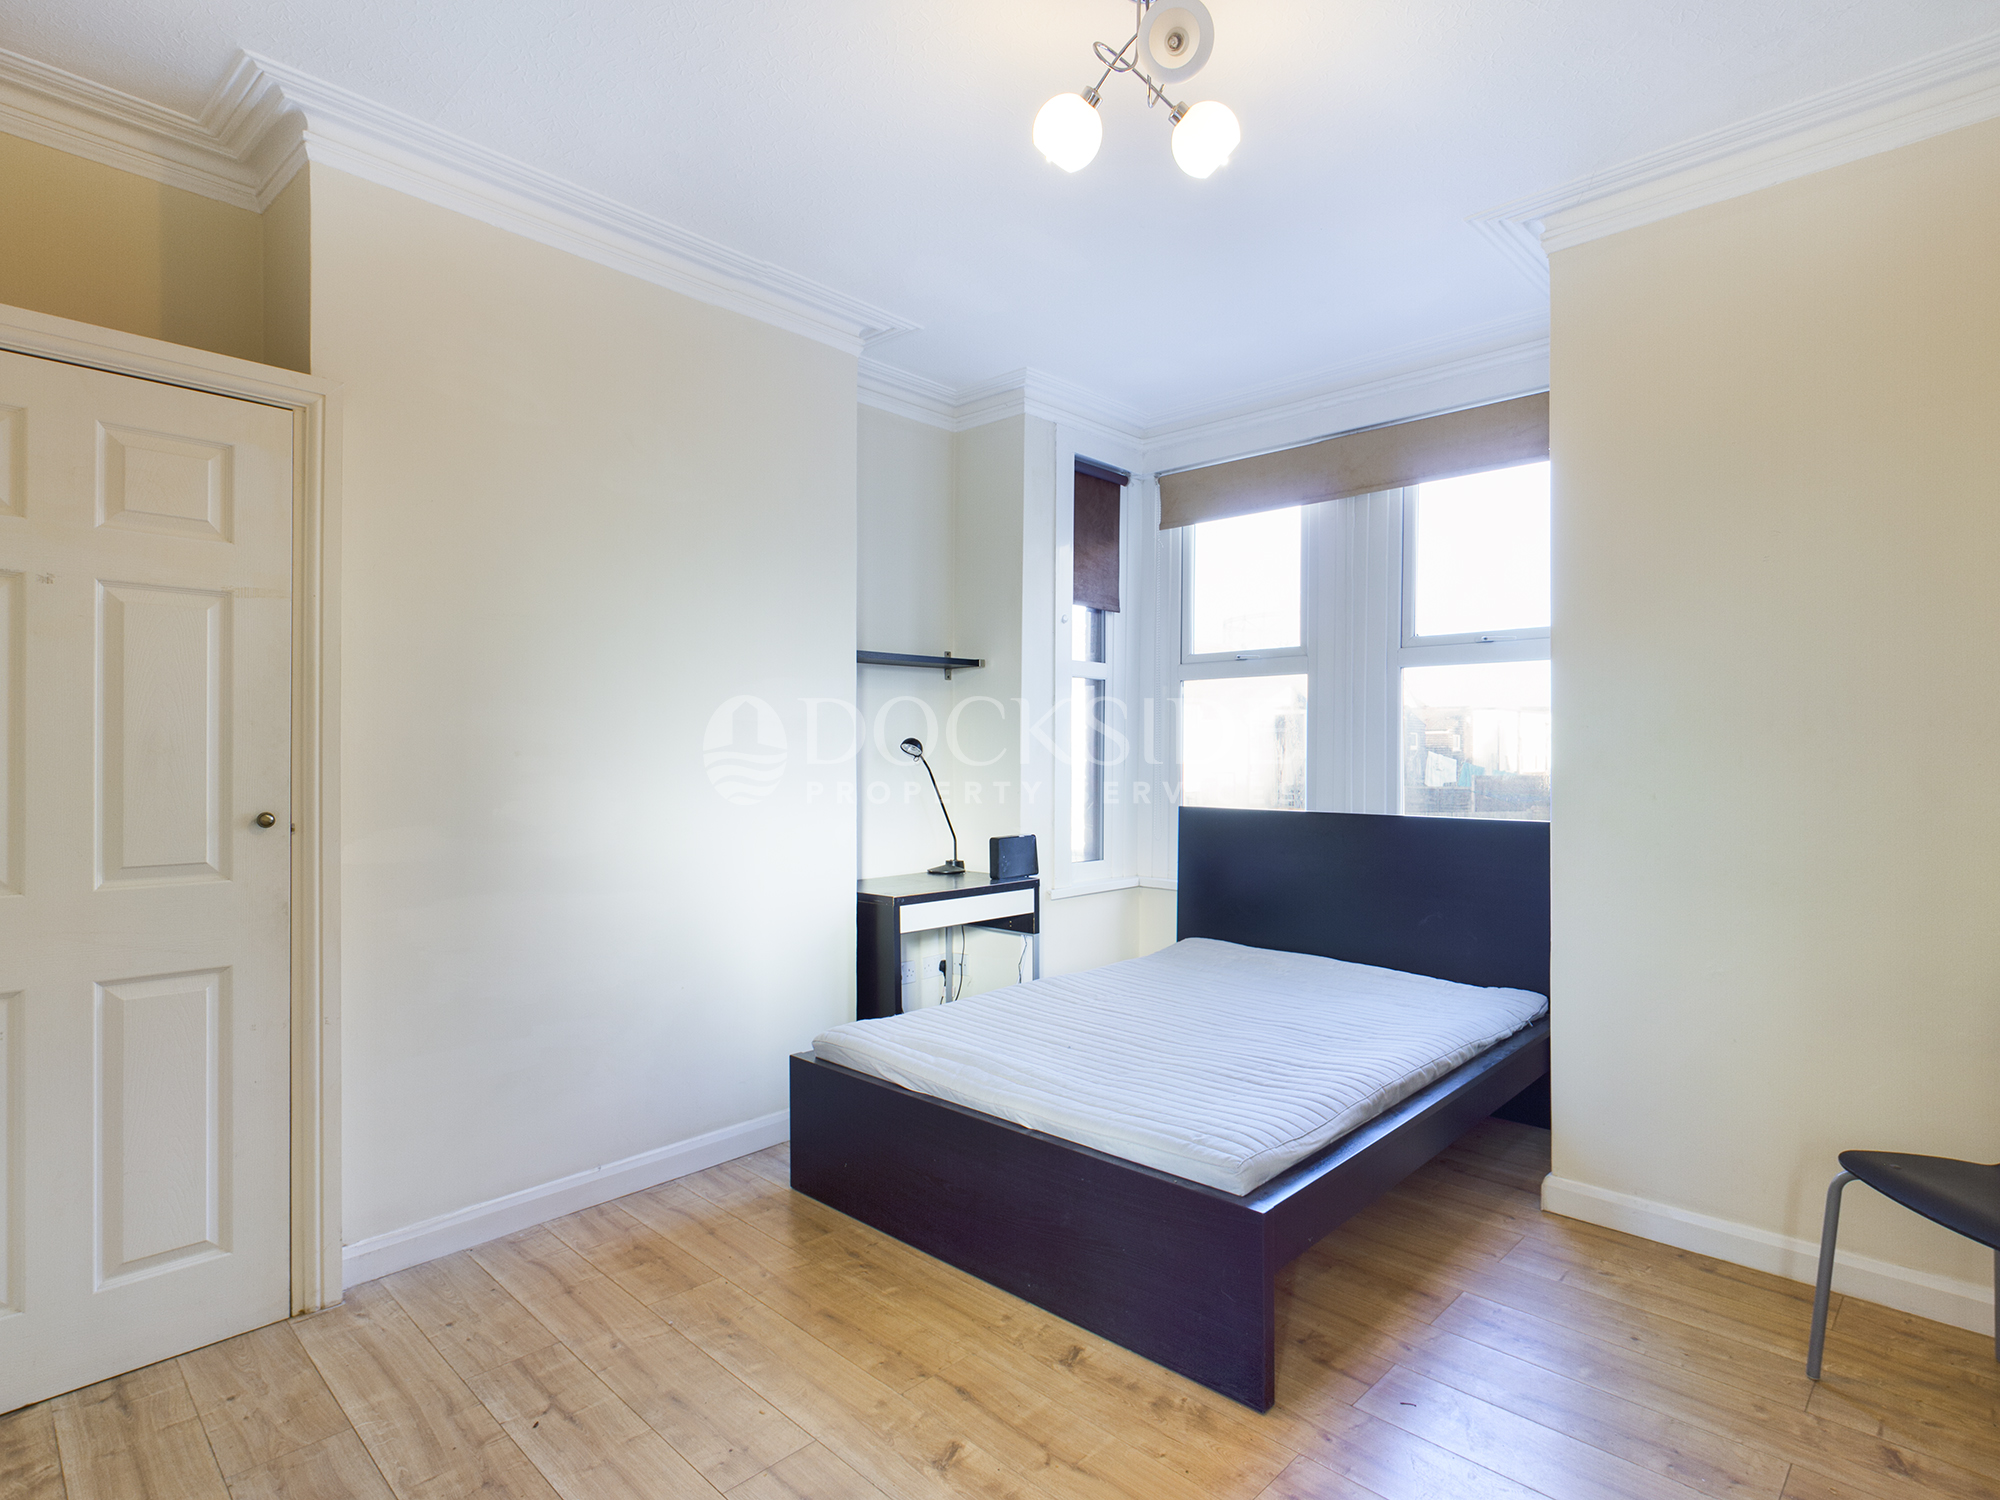 5 bed house to rent in Milner Road, Gillingham, ME7 